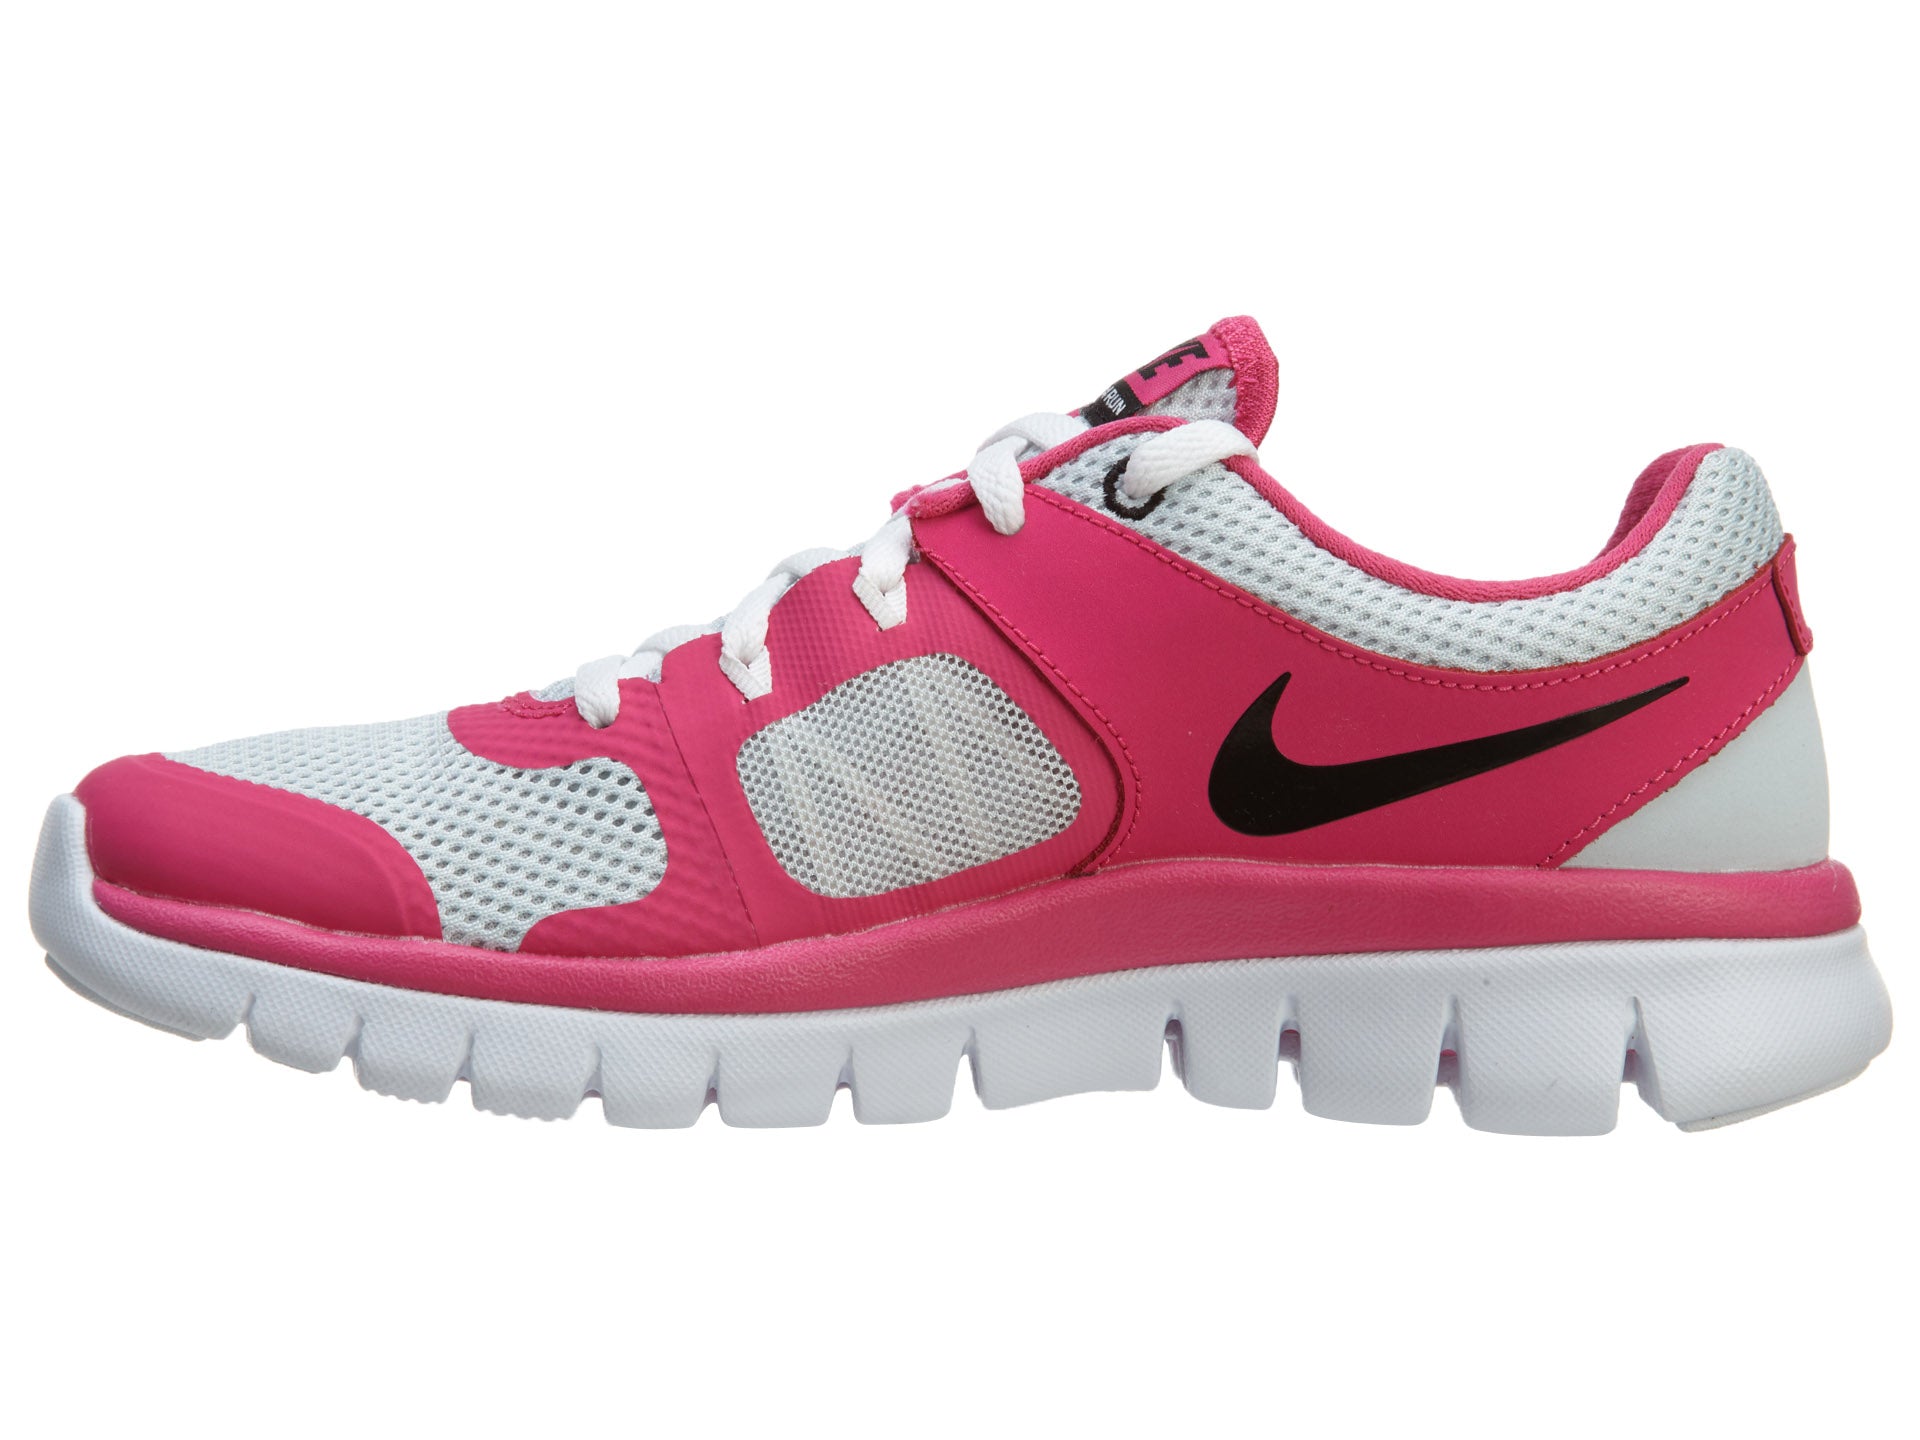 Nike Flex 2014 RN Women's Shoes Sneaker Trainers Running Boys / Girls Style :642755